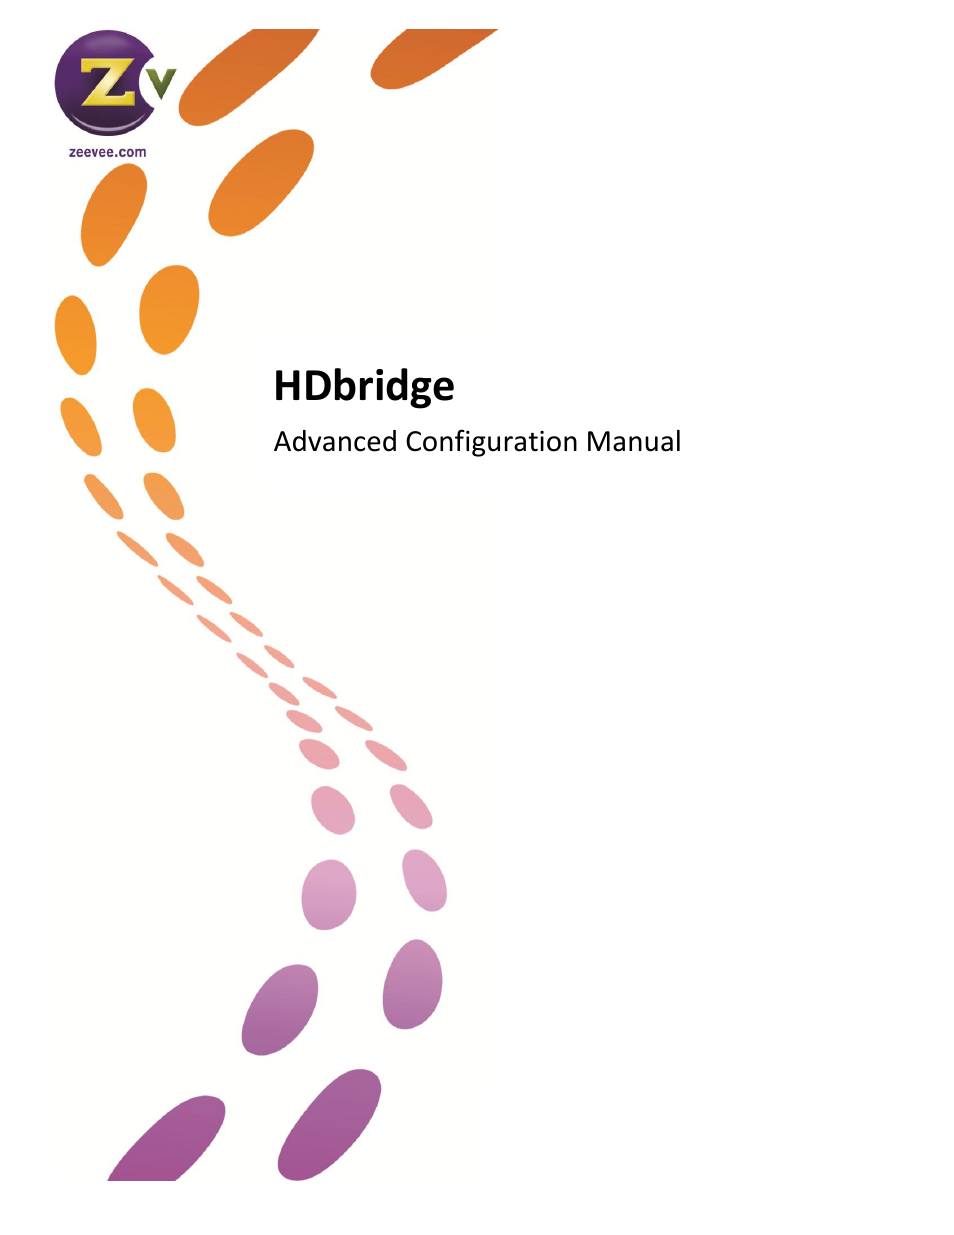 HDbridge Advanced